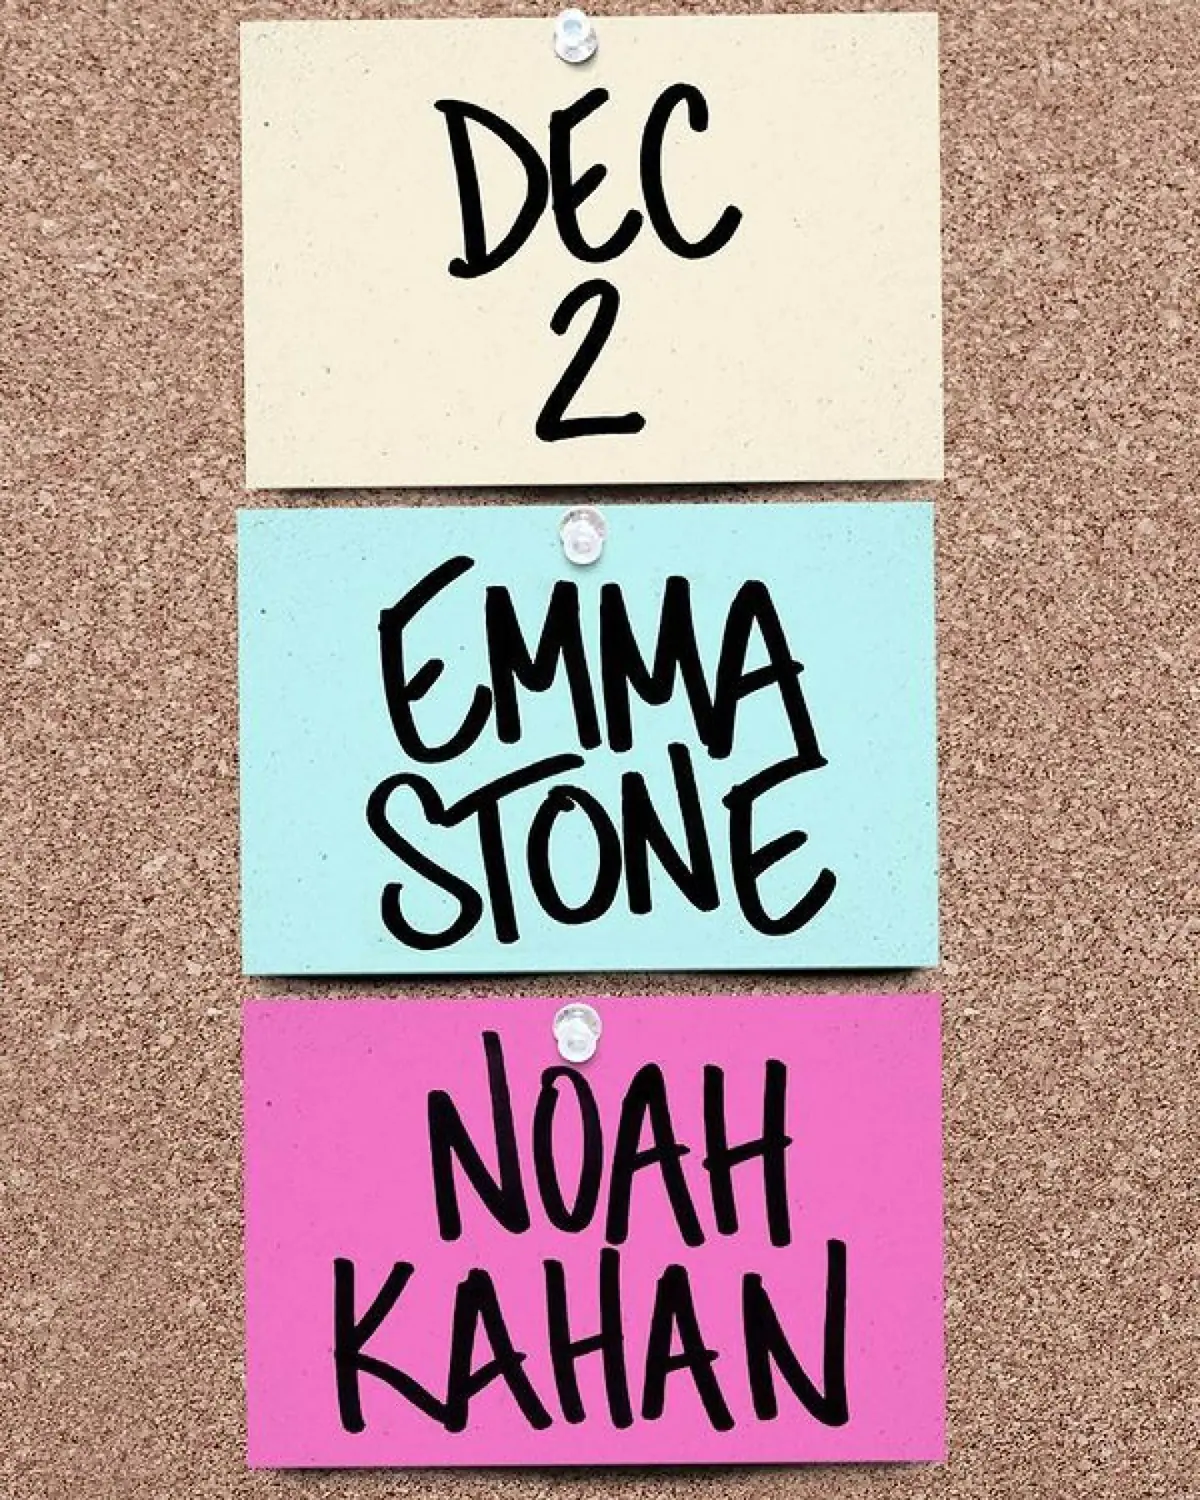 Emma Stone SNL host promo image